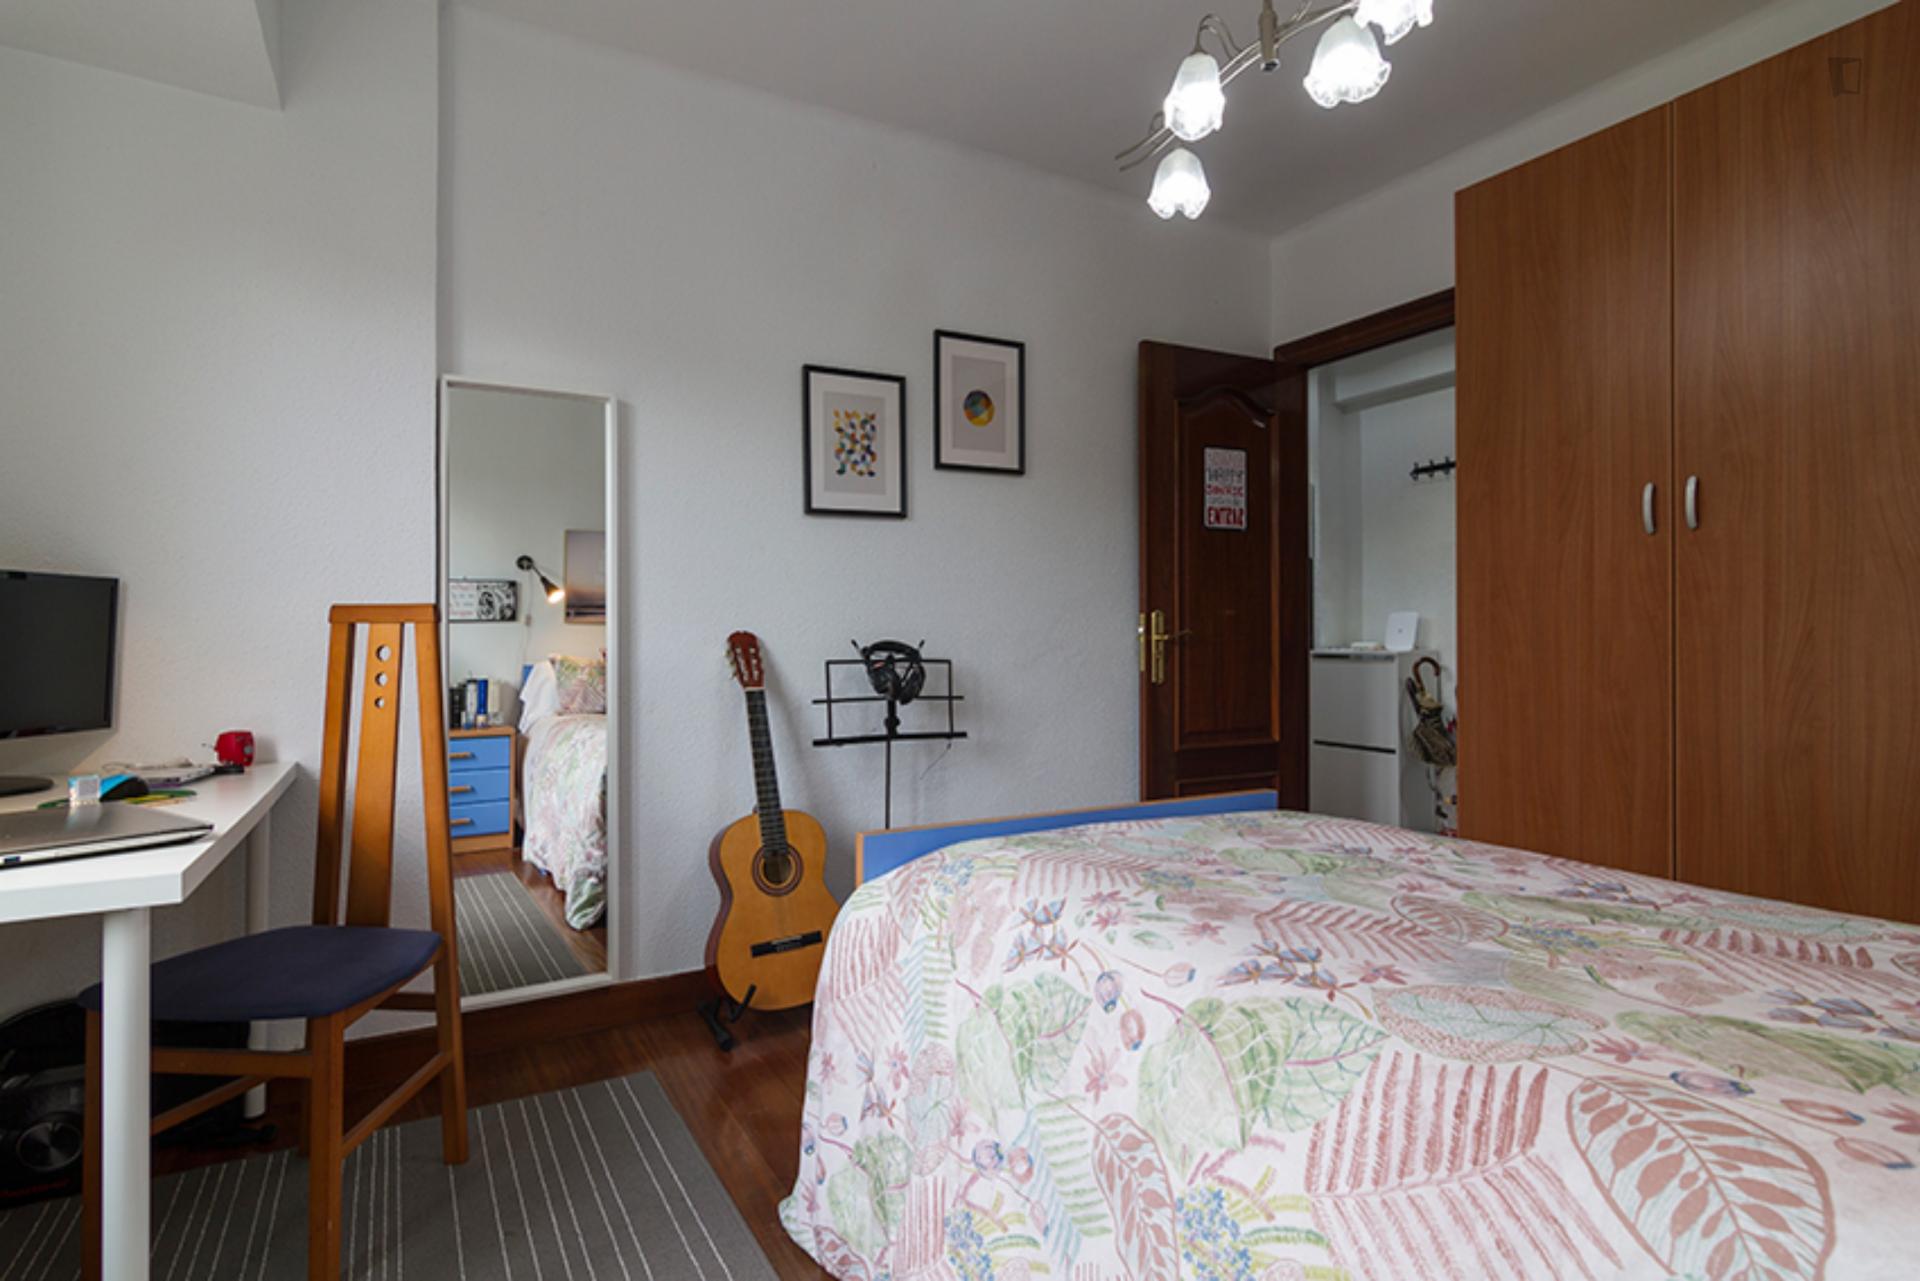 Santutxu - Nice single bedroom in Bilbao